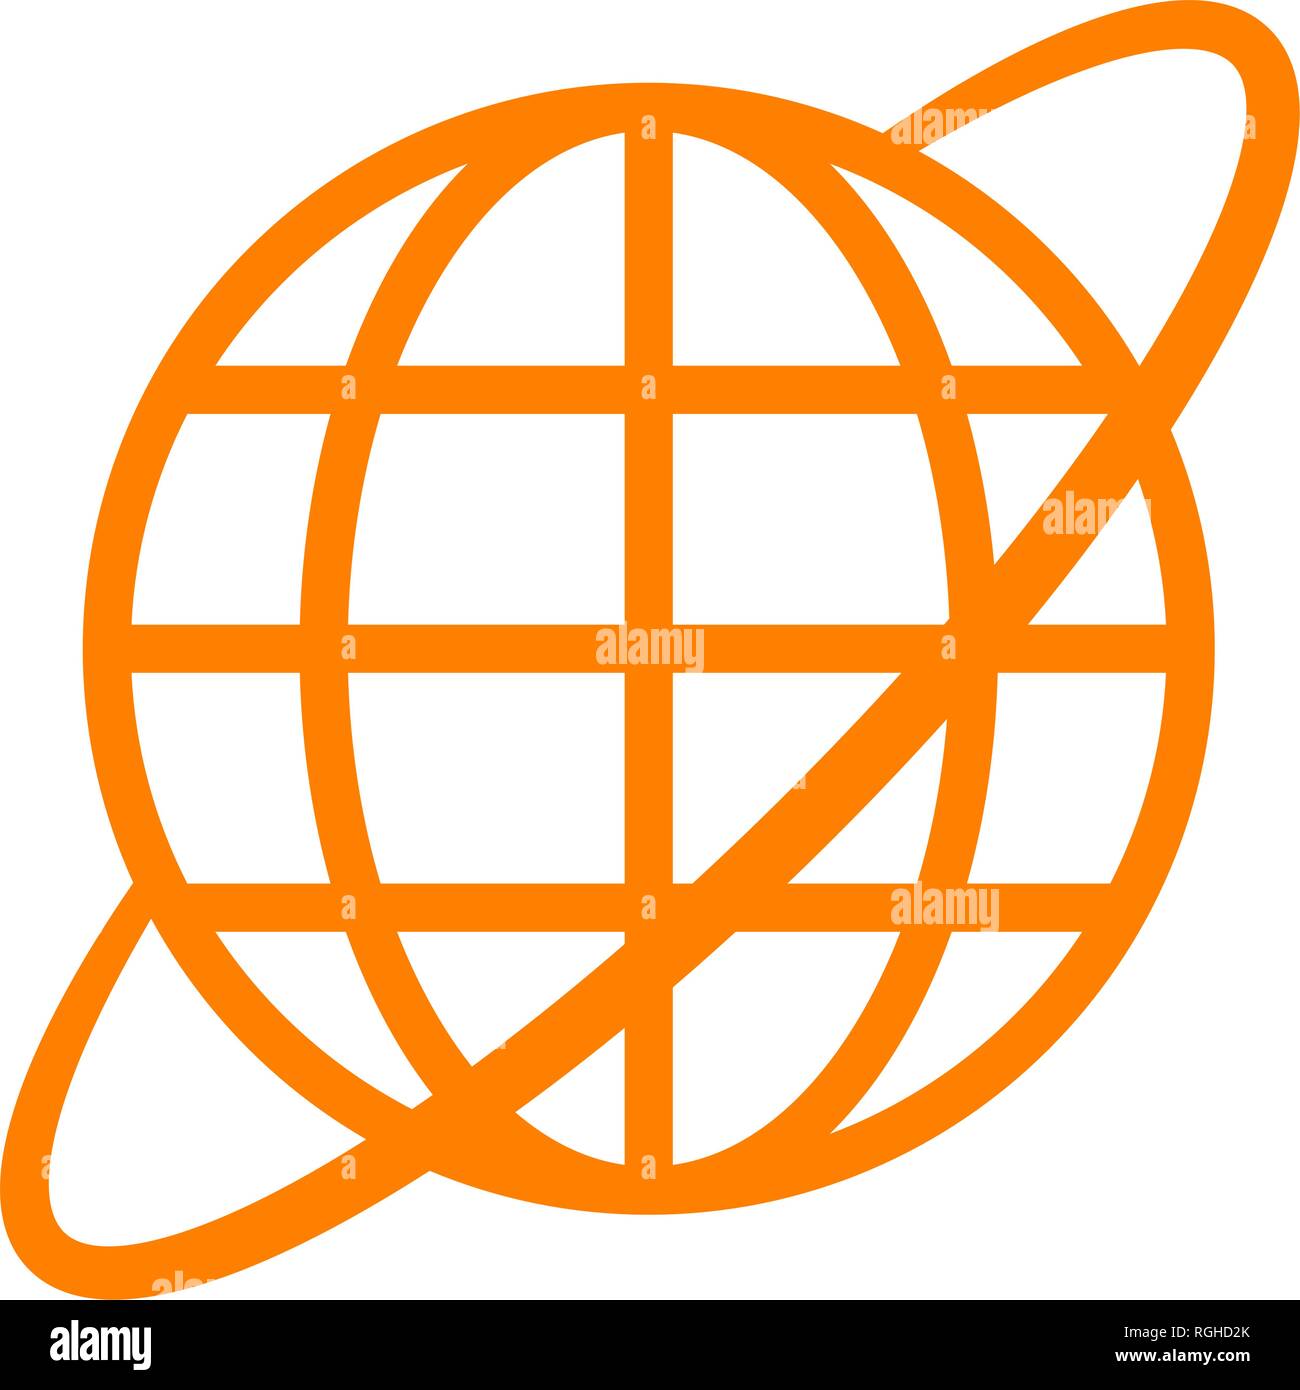 Globe symbol icon with orbit - orange simple, isolated - vector illustration Stock Vector